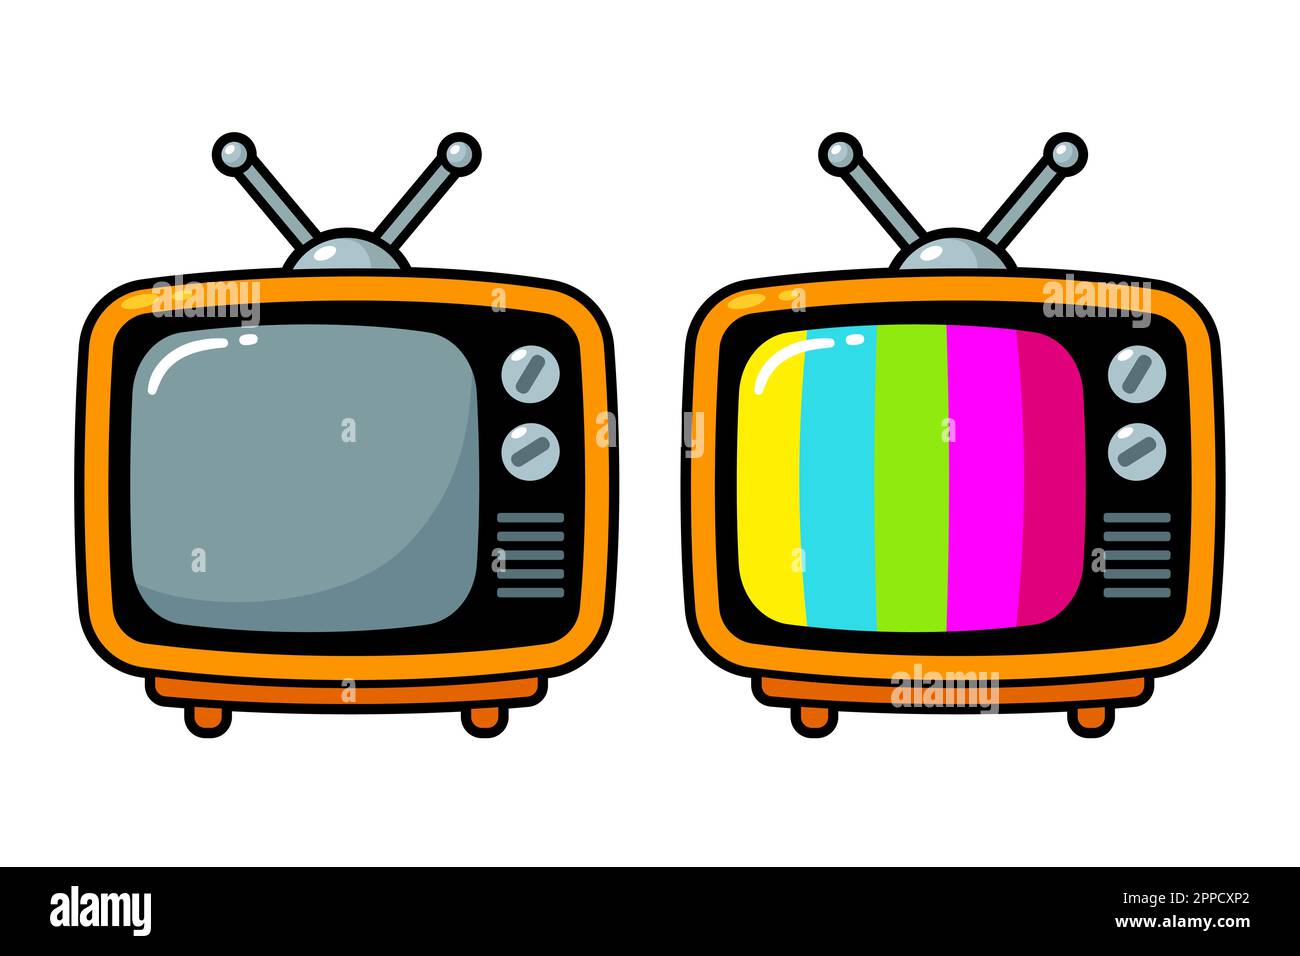 Vintage-Fernseher im süßen Cartoon-Stil. Kein Signal, farbige Streifen (TV-Testmuster). Vektor-Clip-Art-Illustration. Stock Vektor